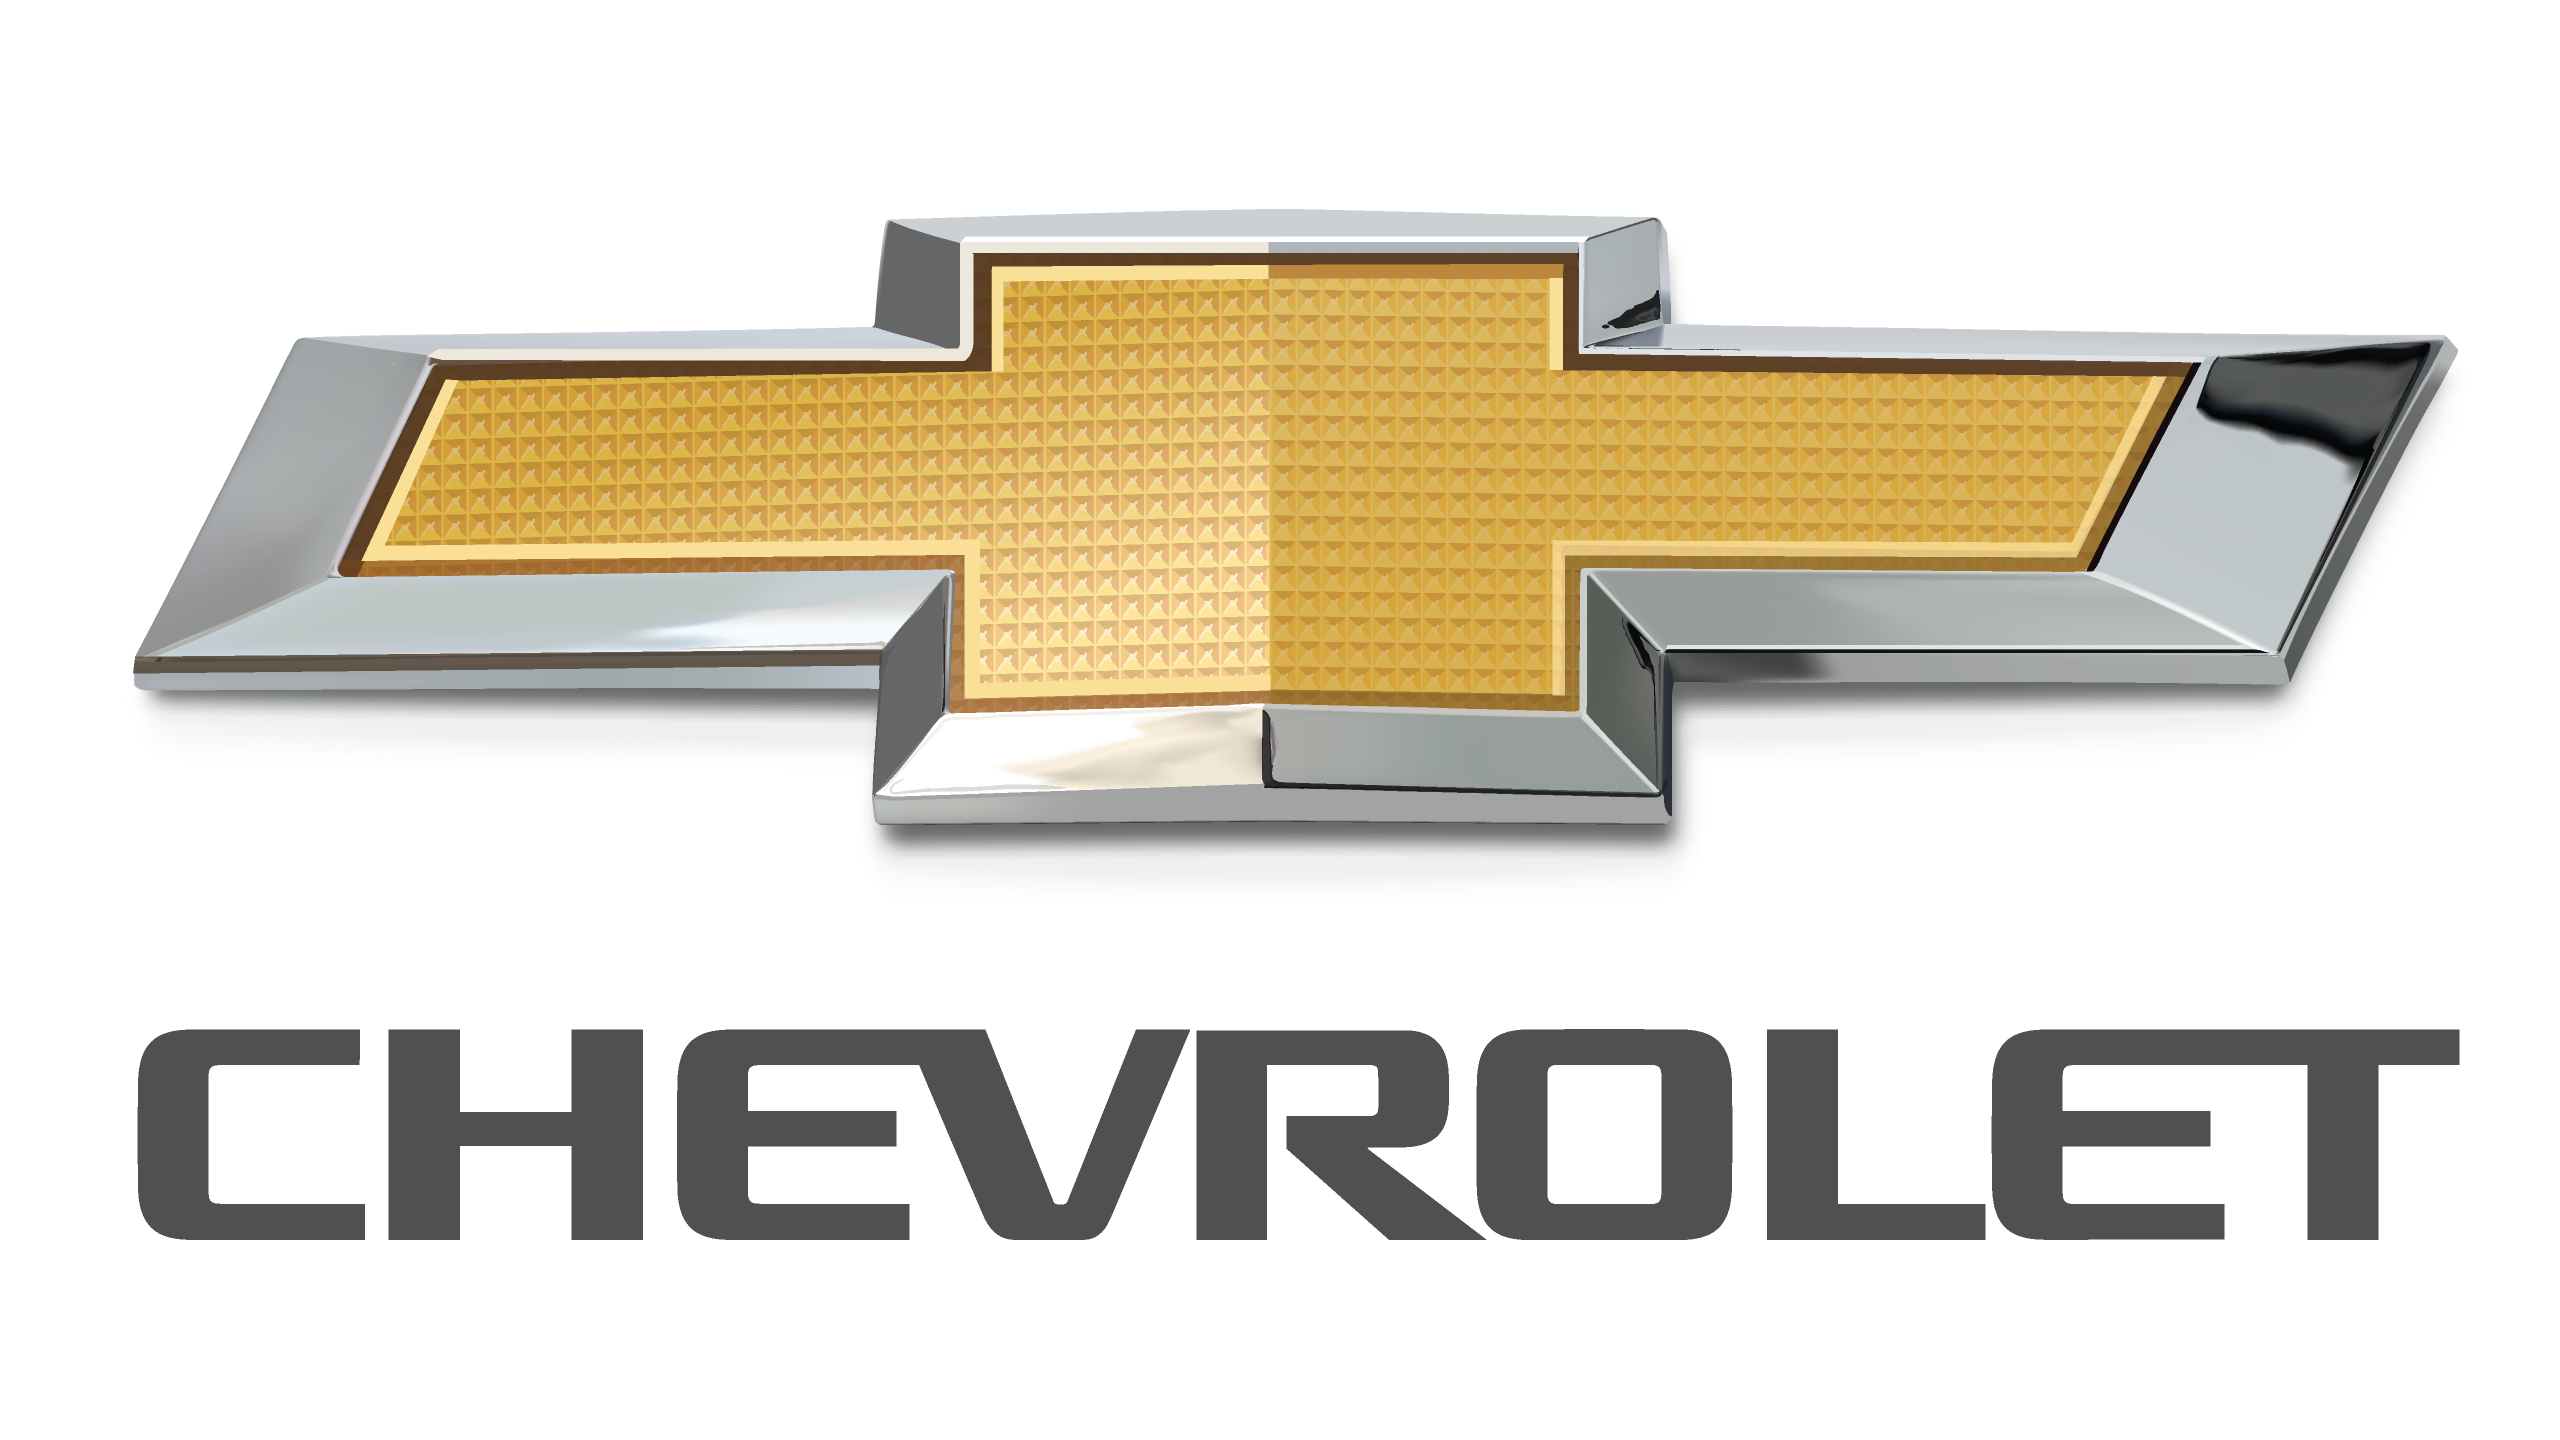 Logotipo da Chevrolet